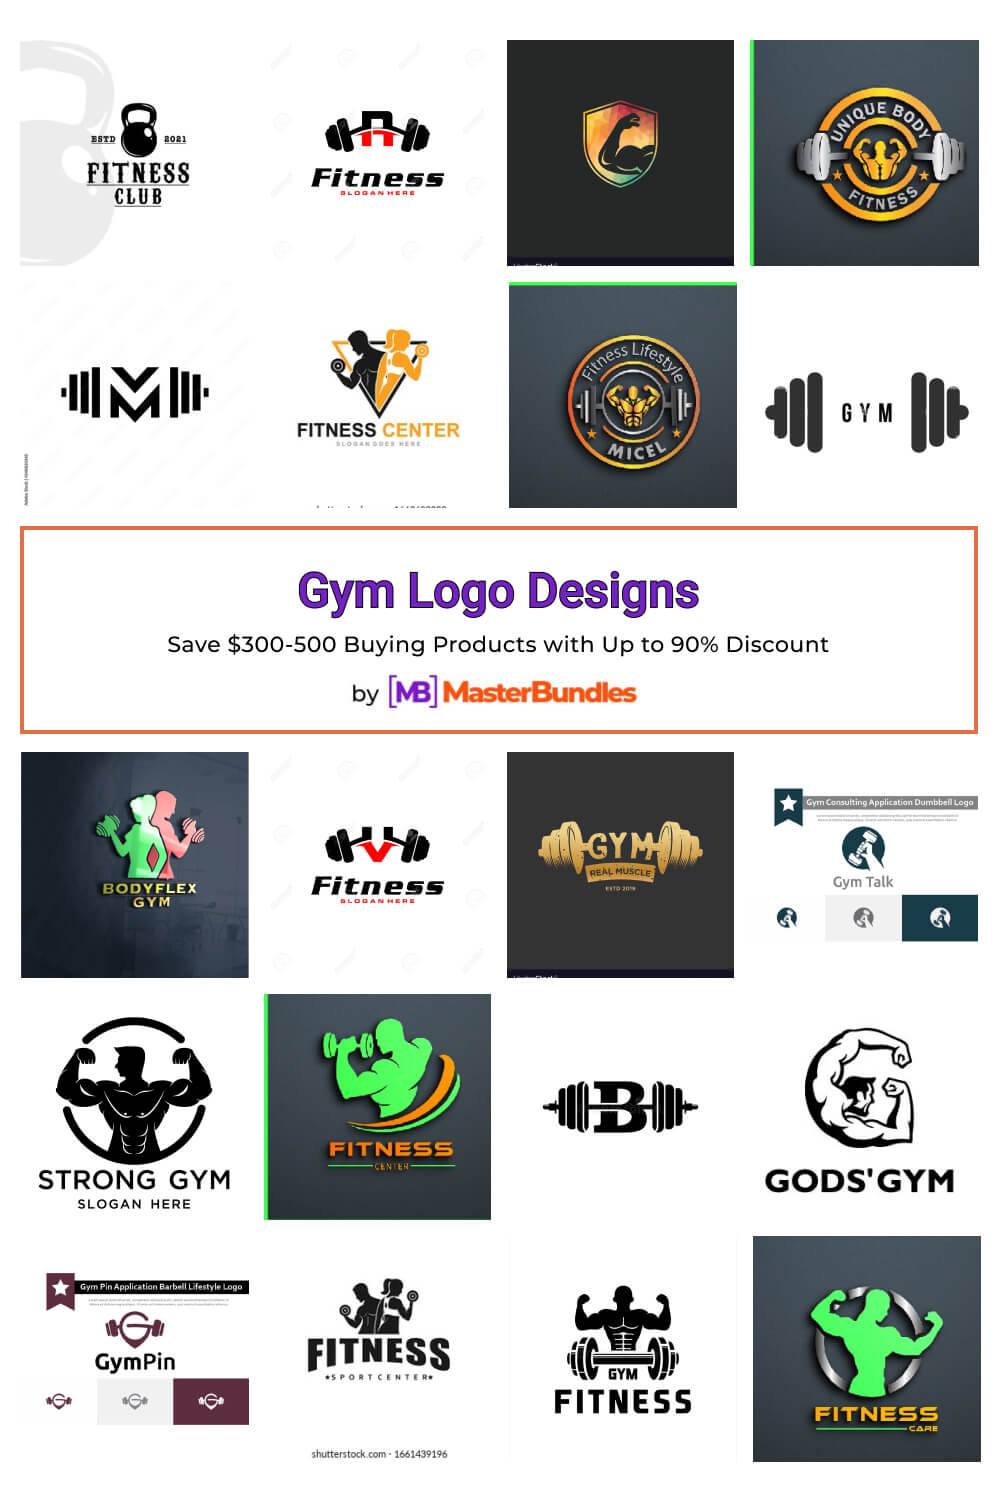 gym logo designs pinterest image.